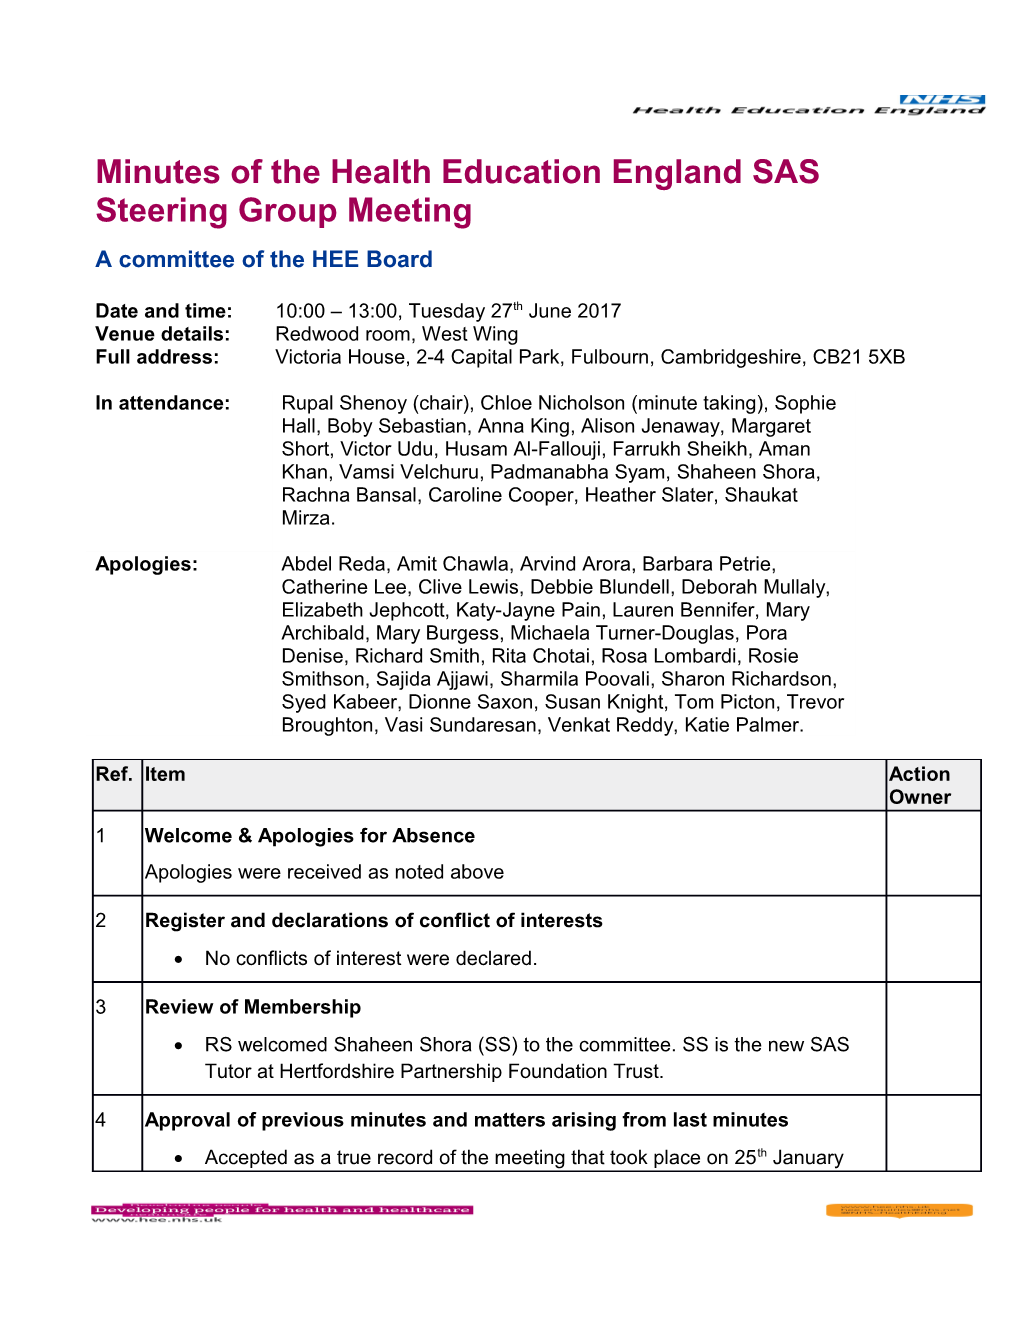 Minutes of the Health Education Englandsas Steering Group Meeting